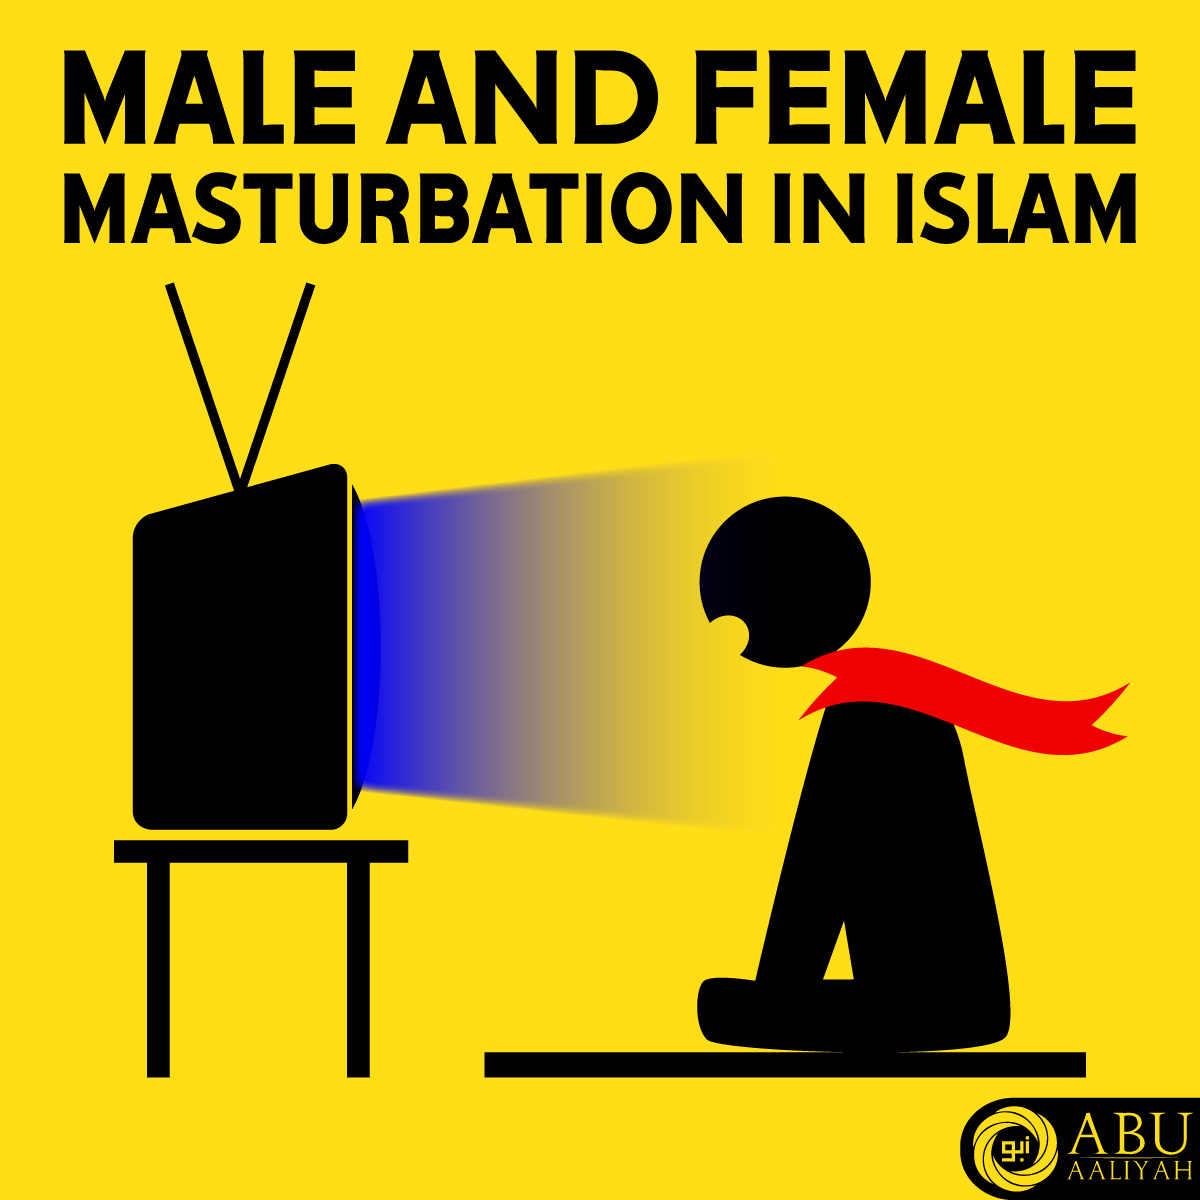 islam stop masturbation